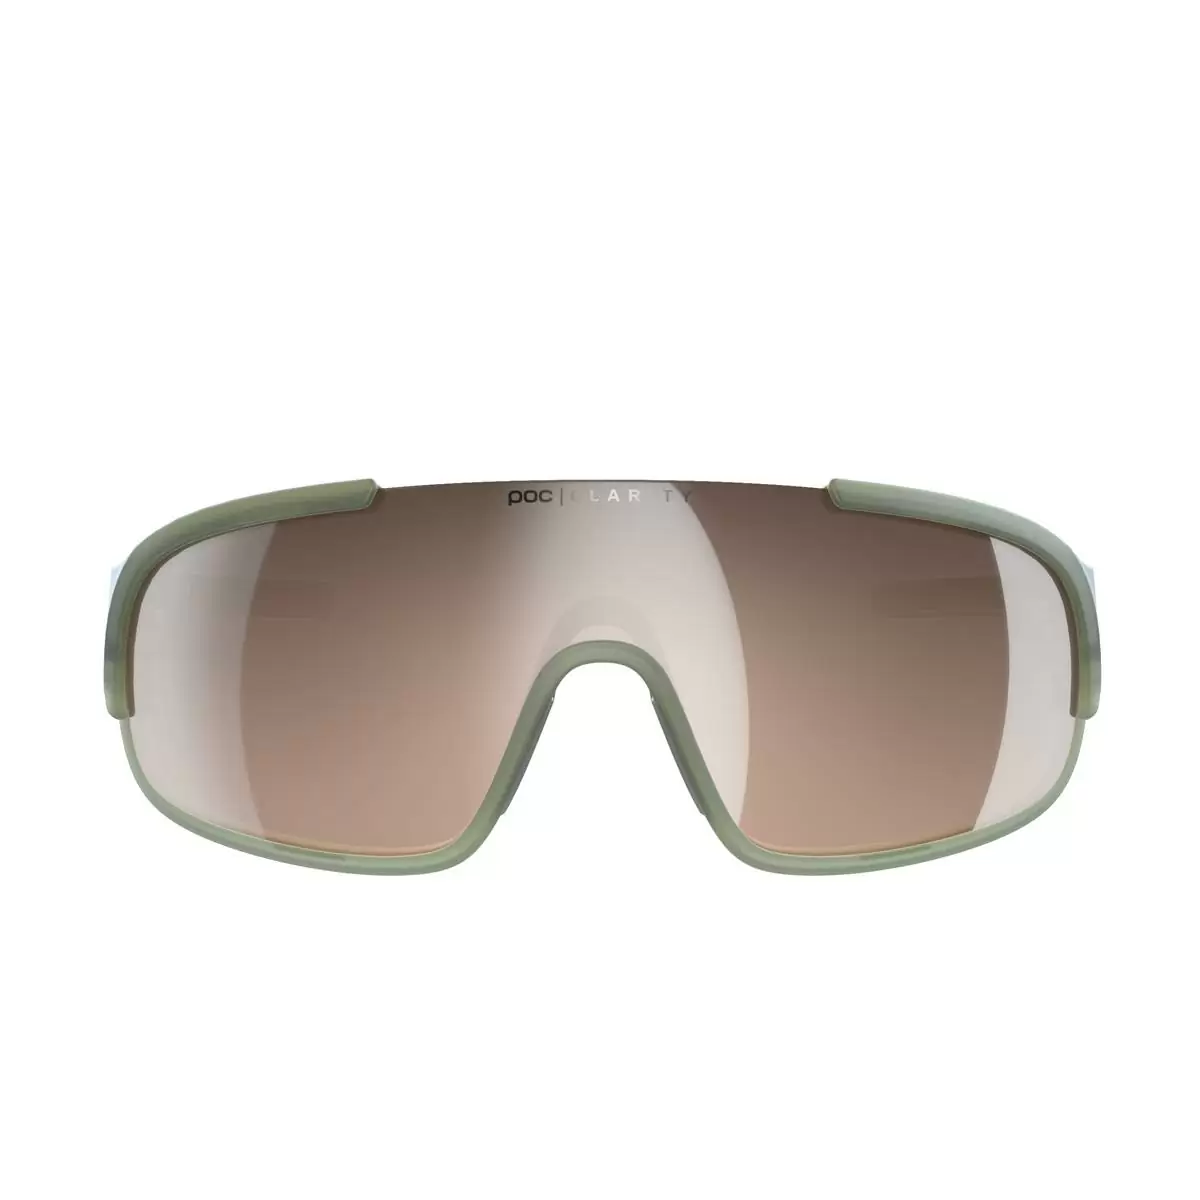 Crave Sunglasses Epidote Green Brown/Silver Mirror Lens #2